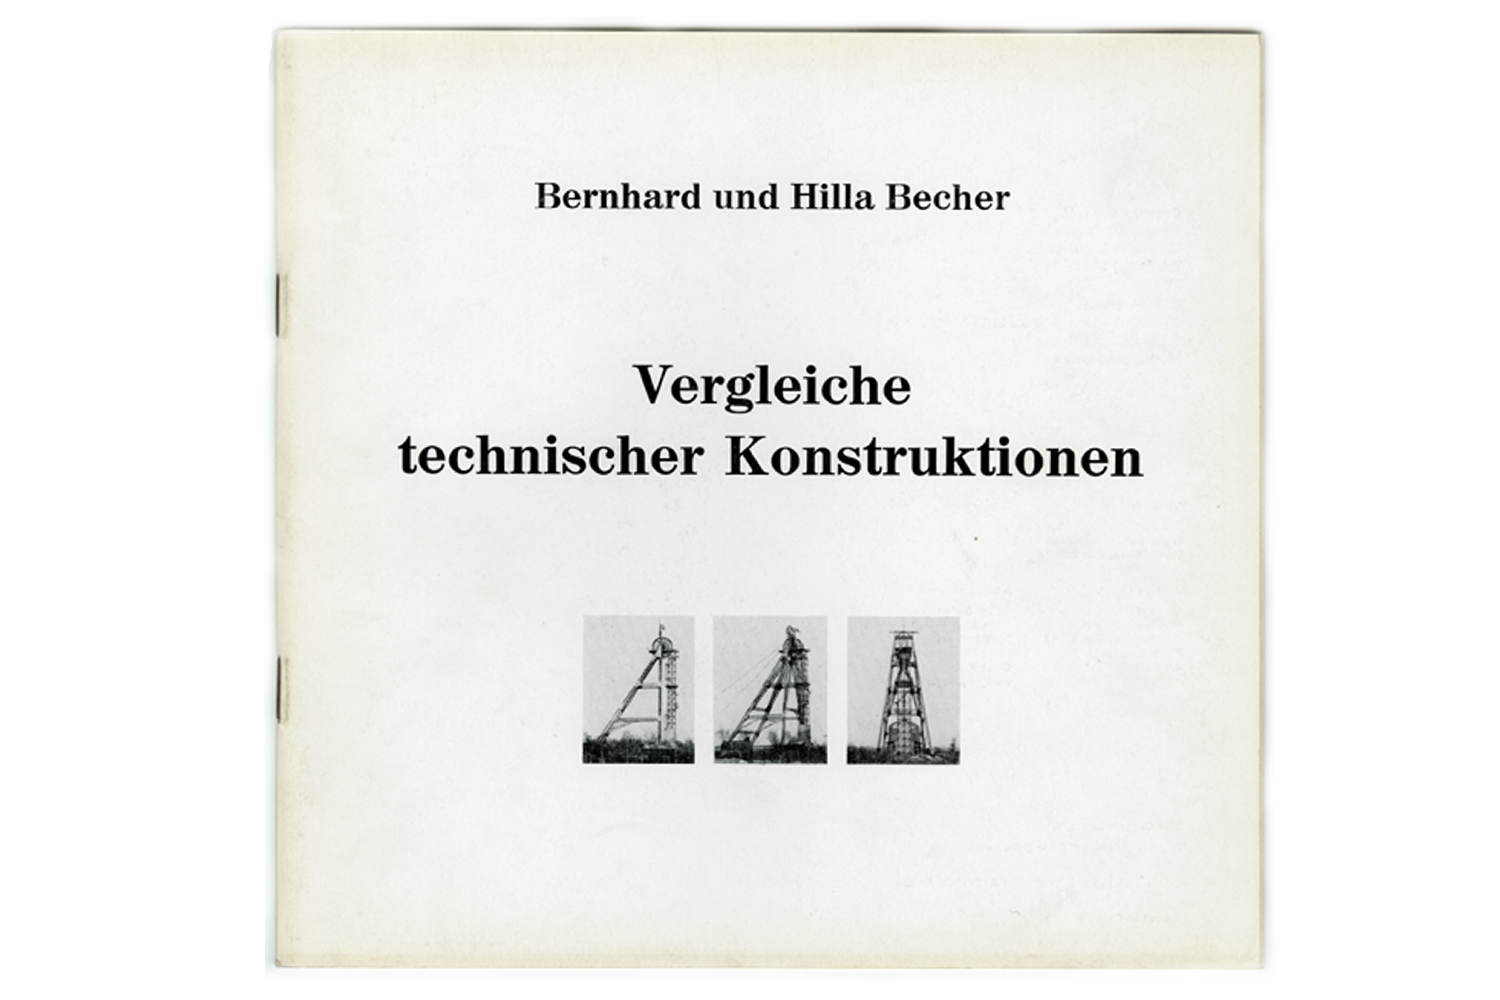 Image: Vergleiche Techniser konstructionen, catalogue